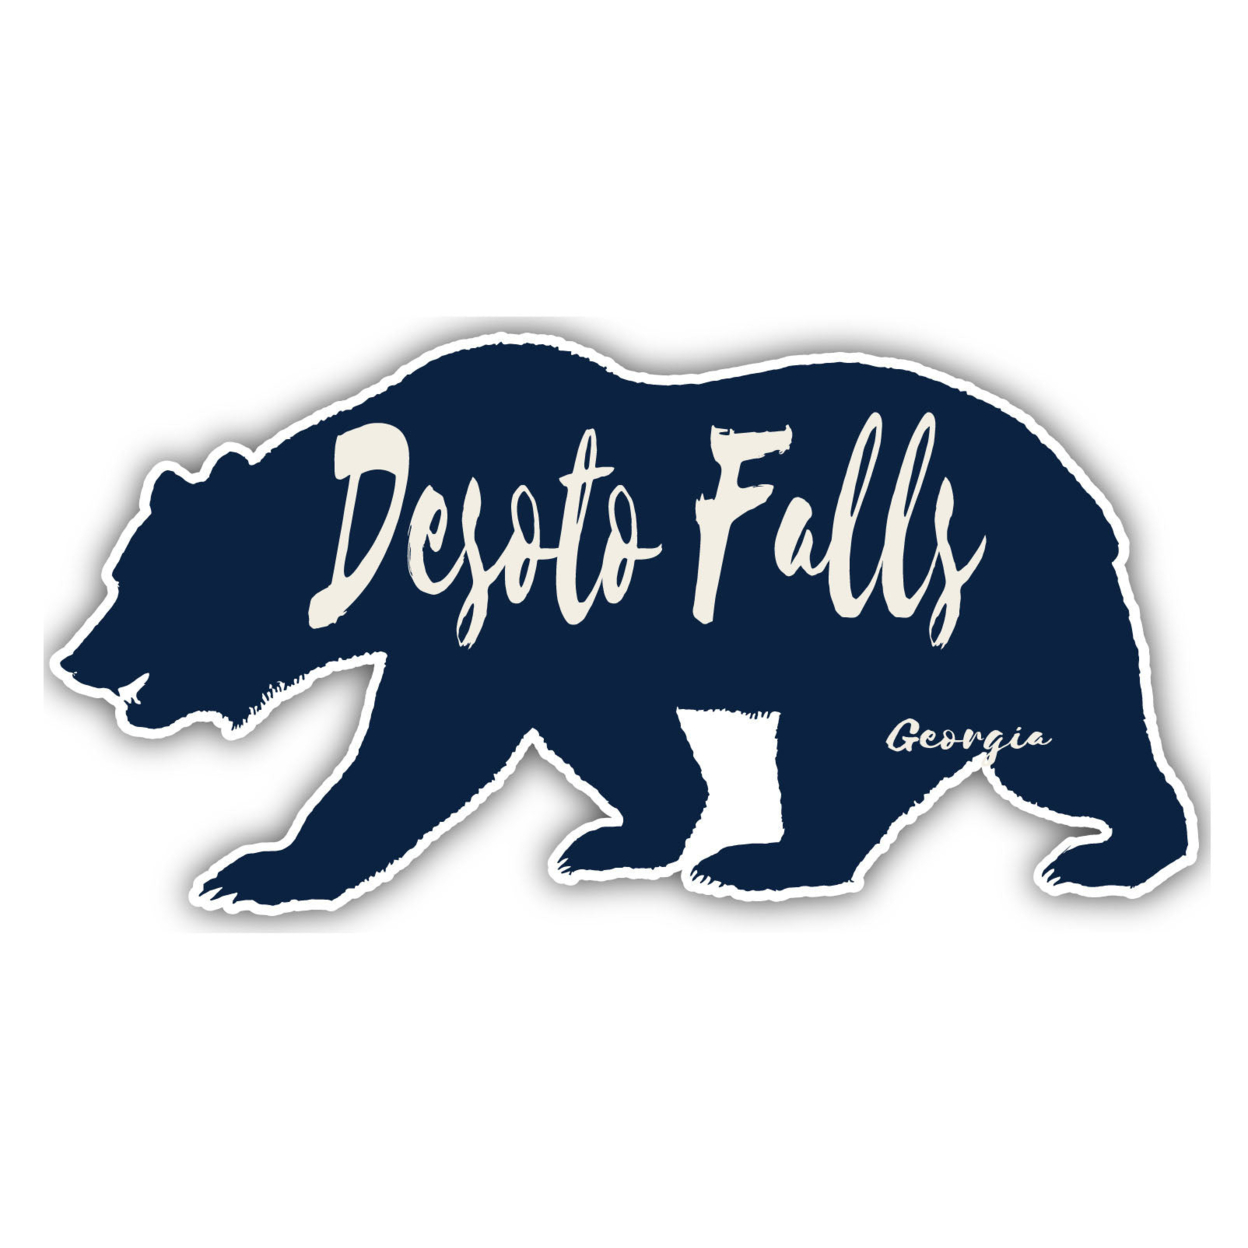 DeSoto Falls Georgia Souvenir Decorative Stickers (Choose Theme And Size) - 4-Pack, 8-Inch, Bear